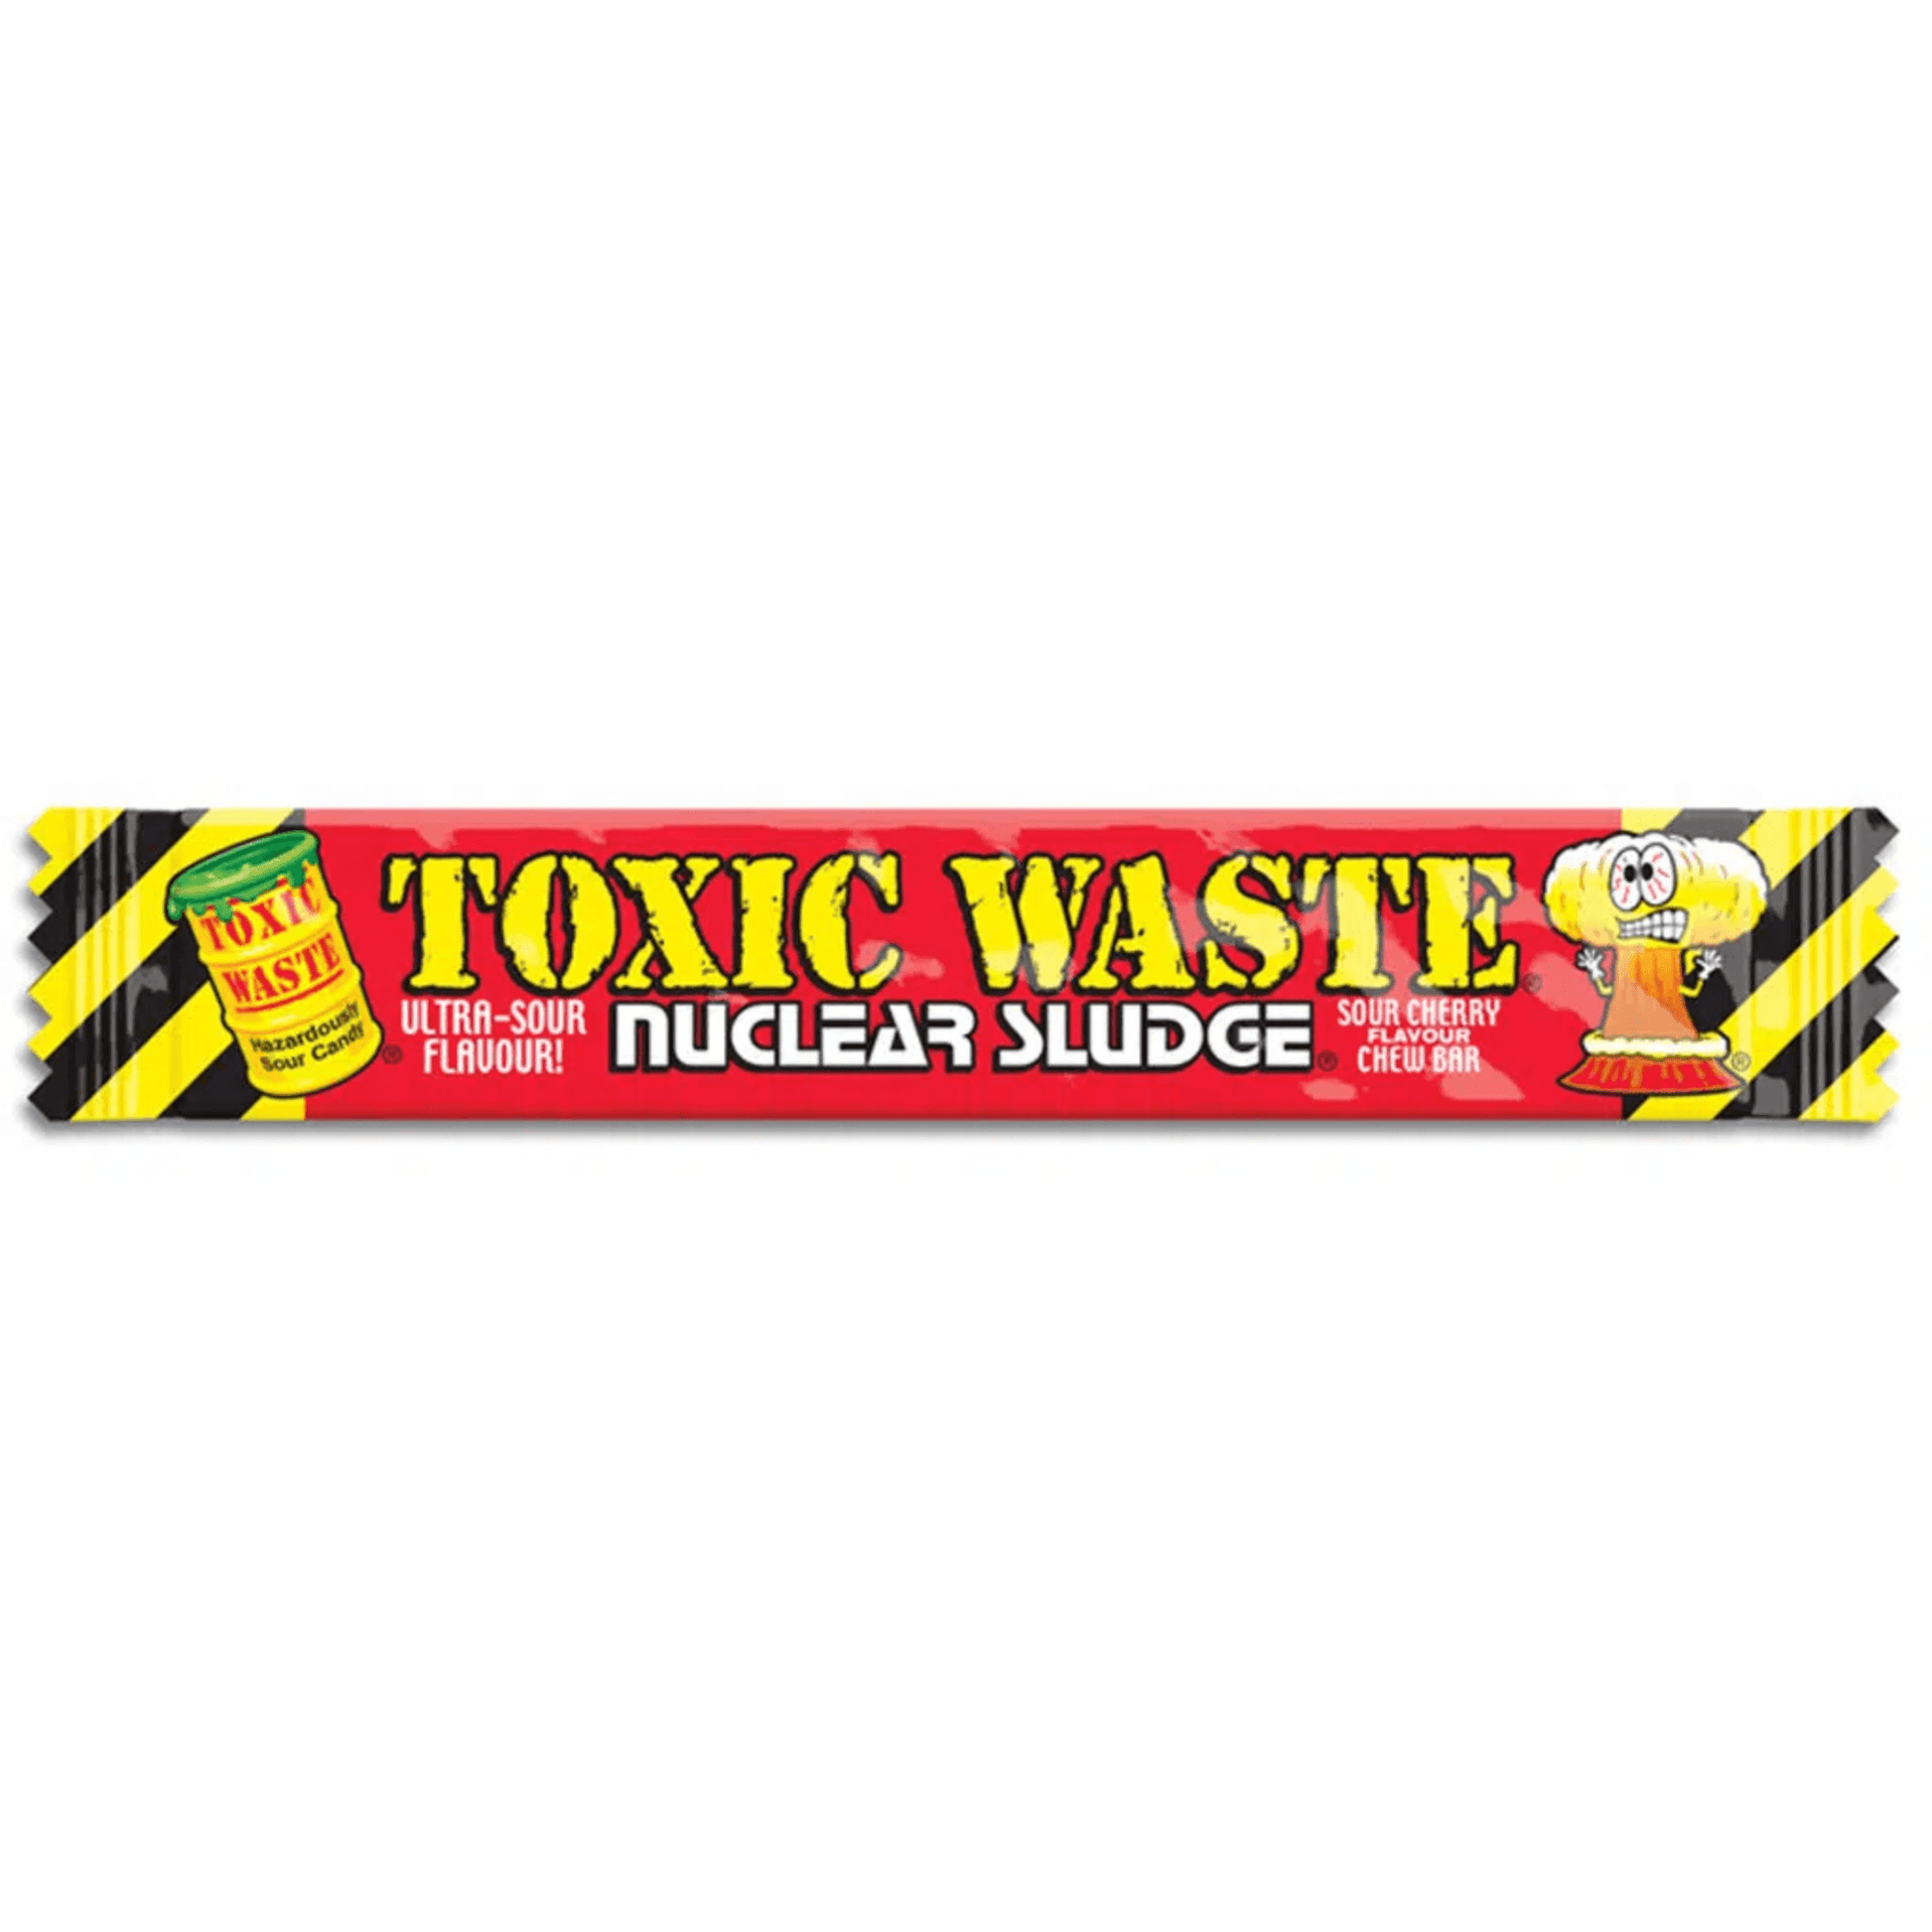 Toxic Waste | Nuclear Sludge Chew Bar - Sour Cherry (20g) - Sour Candy - Scran.ie